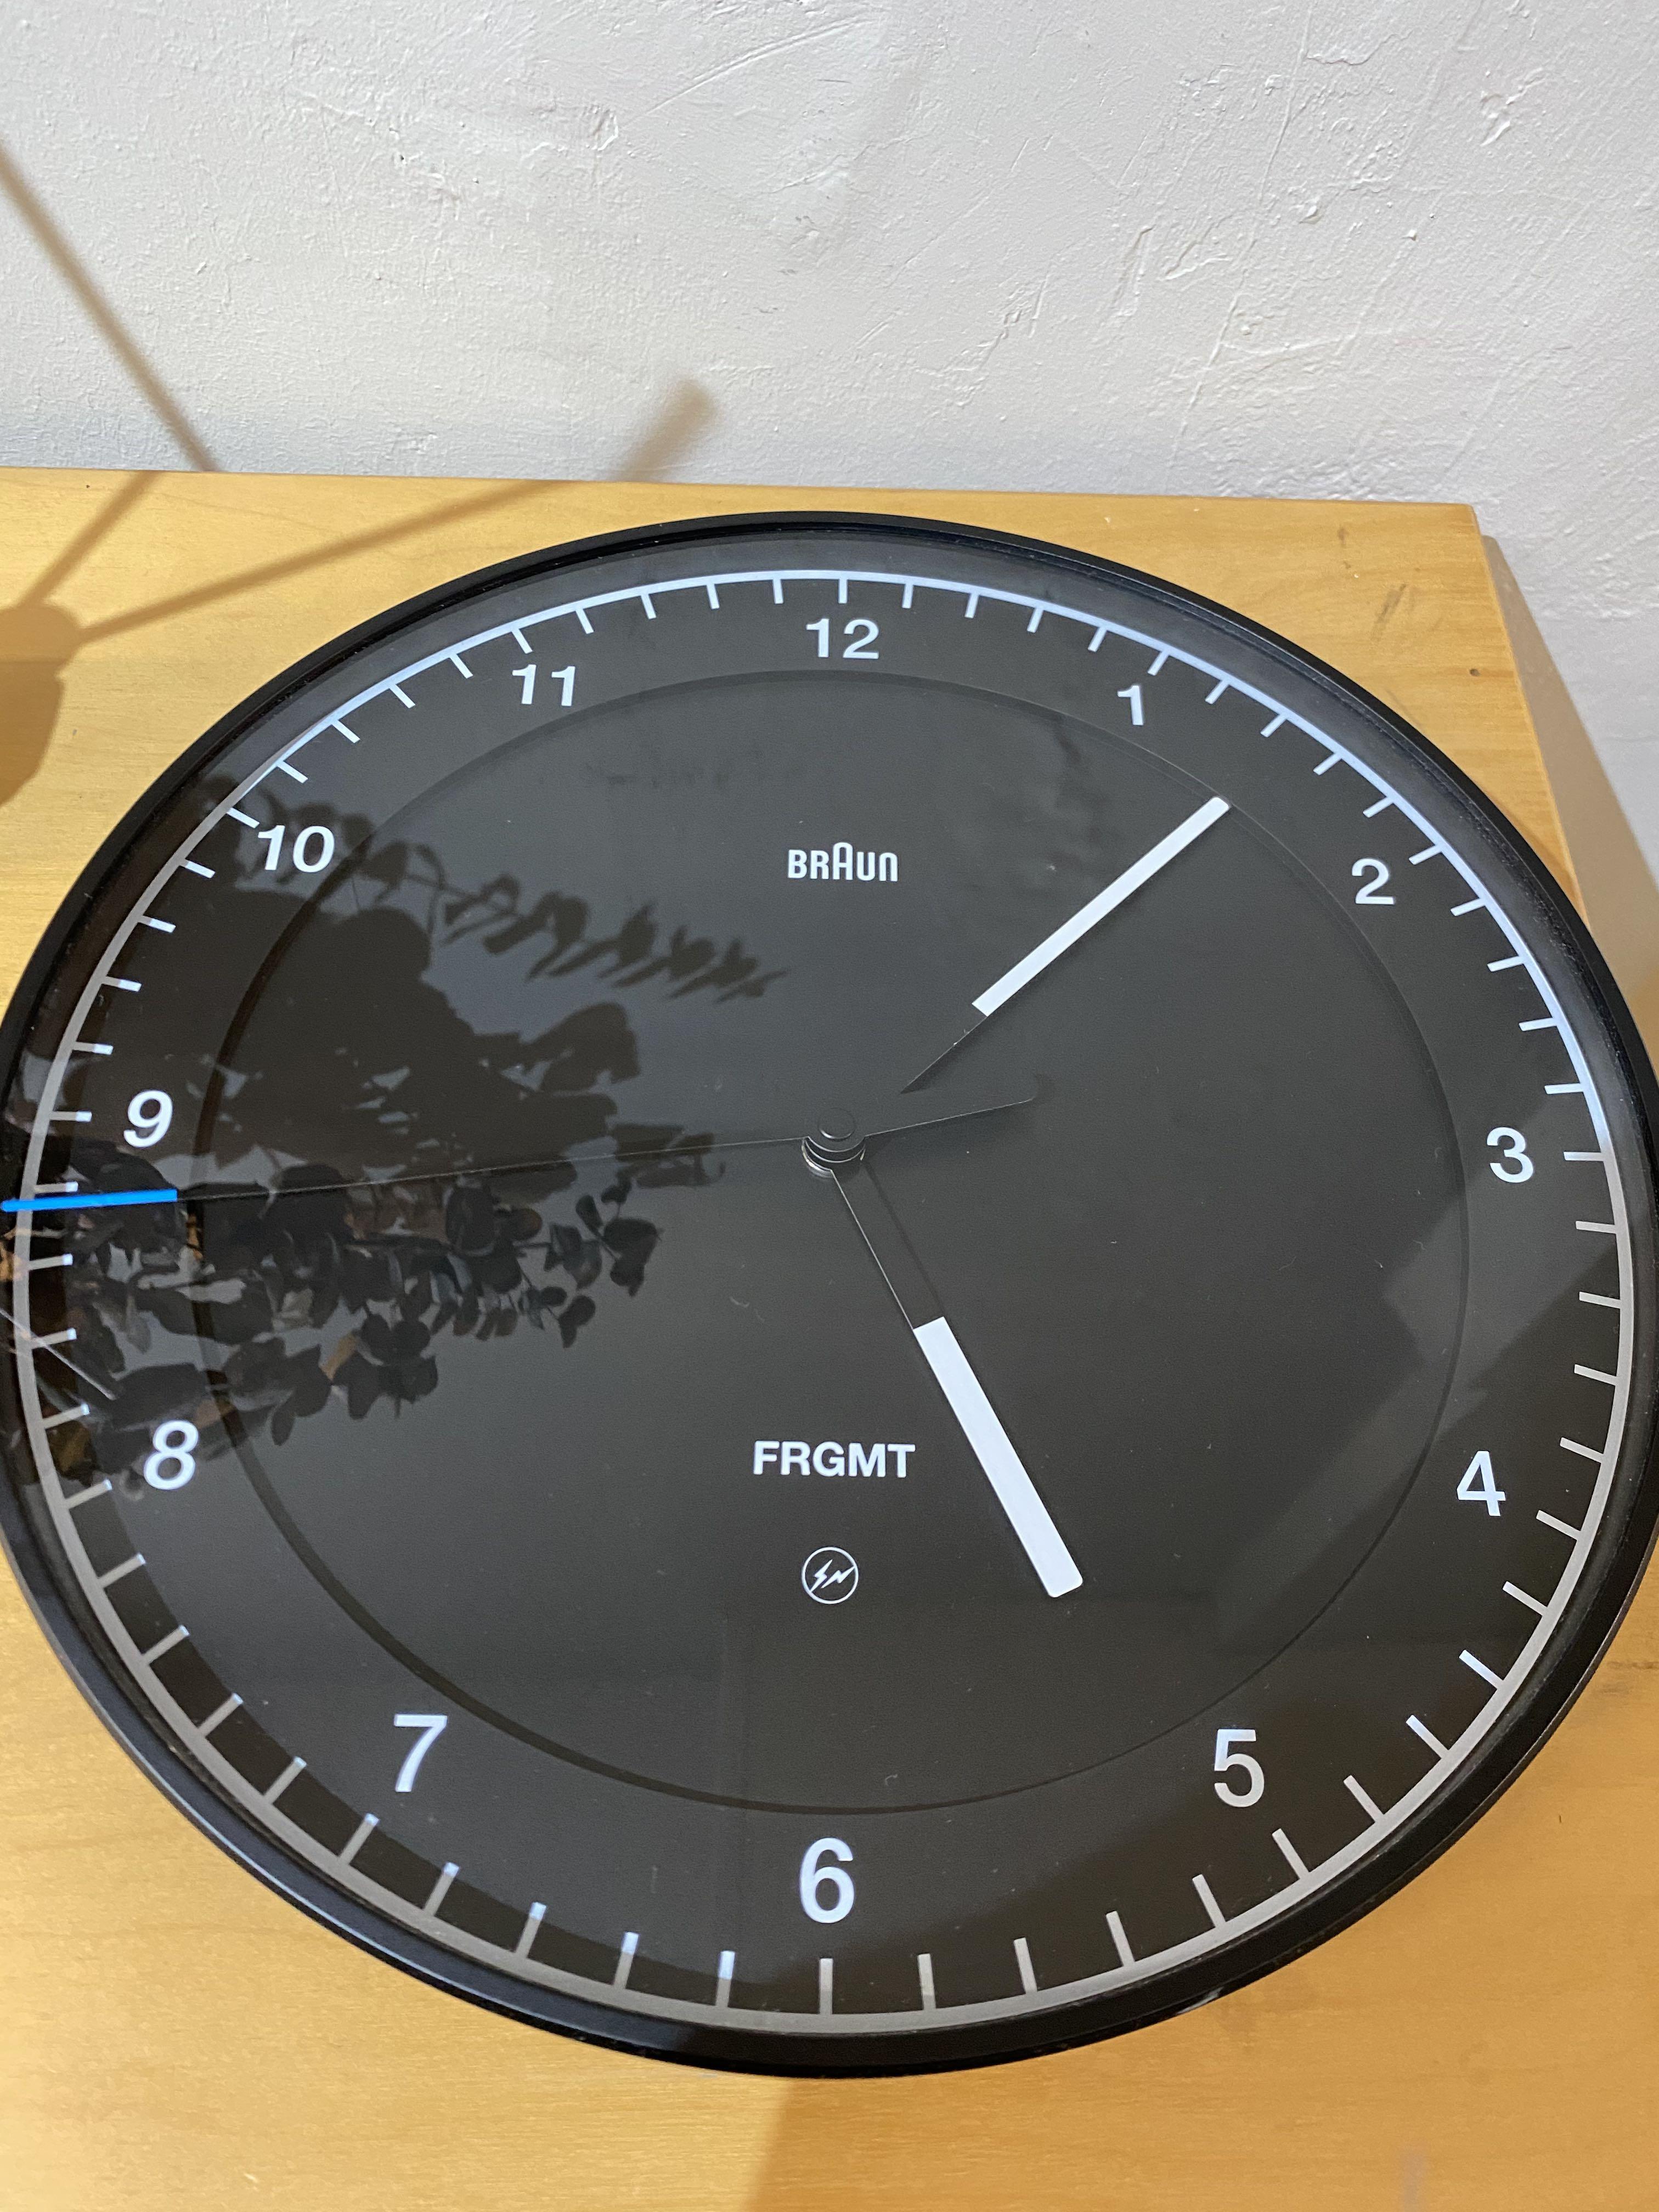 Braun fragment clock